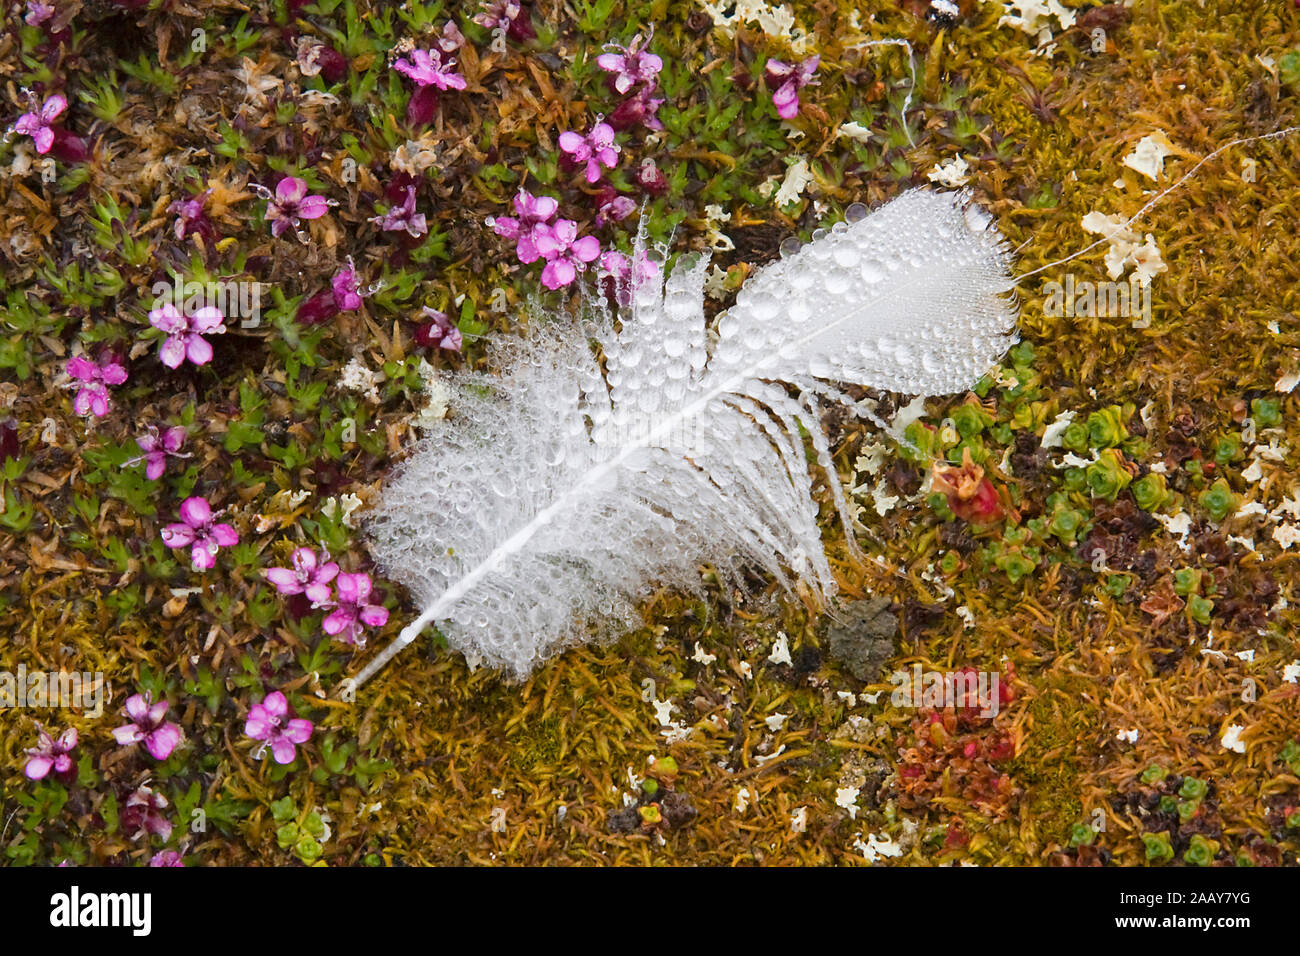 Tautropfen auf Gaensefeder | Goose feather with water drops Stock Photo